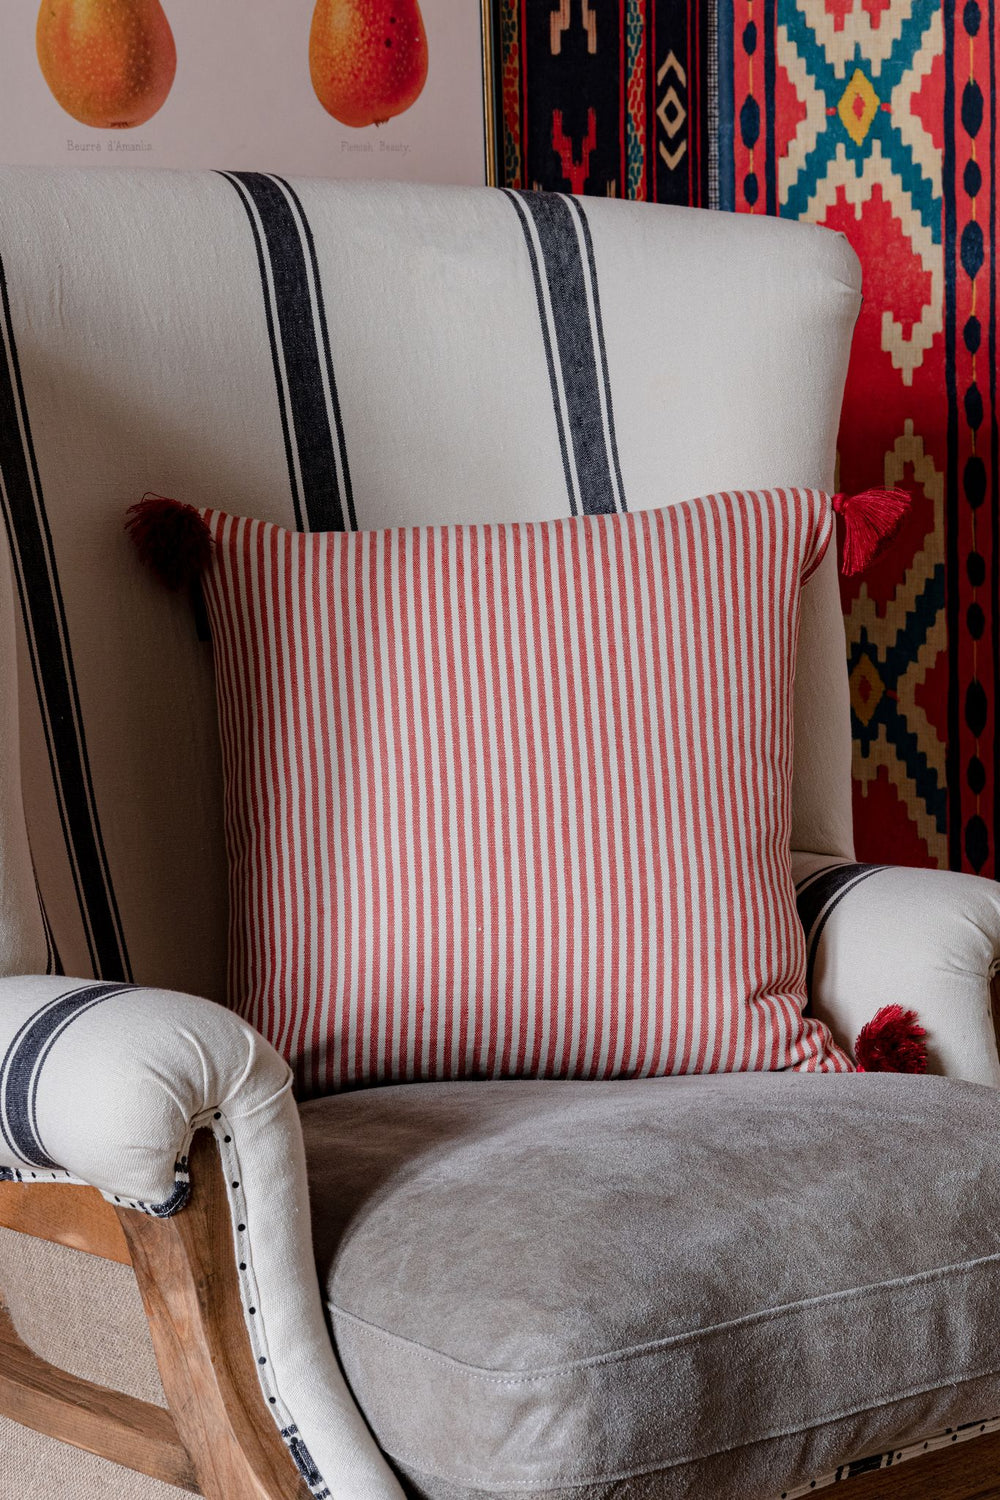 rhubarb-stripe-linen-cushion-red-white-red-tassel-mind-the-gap-black-white-armchair